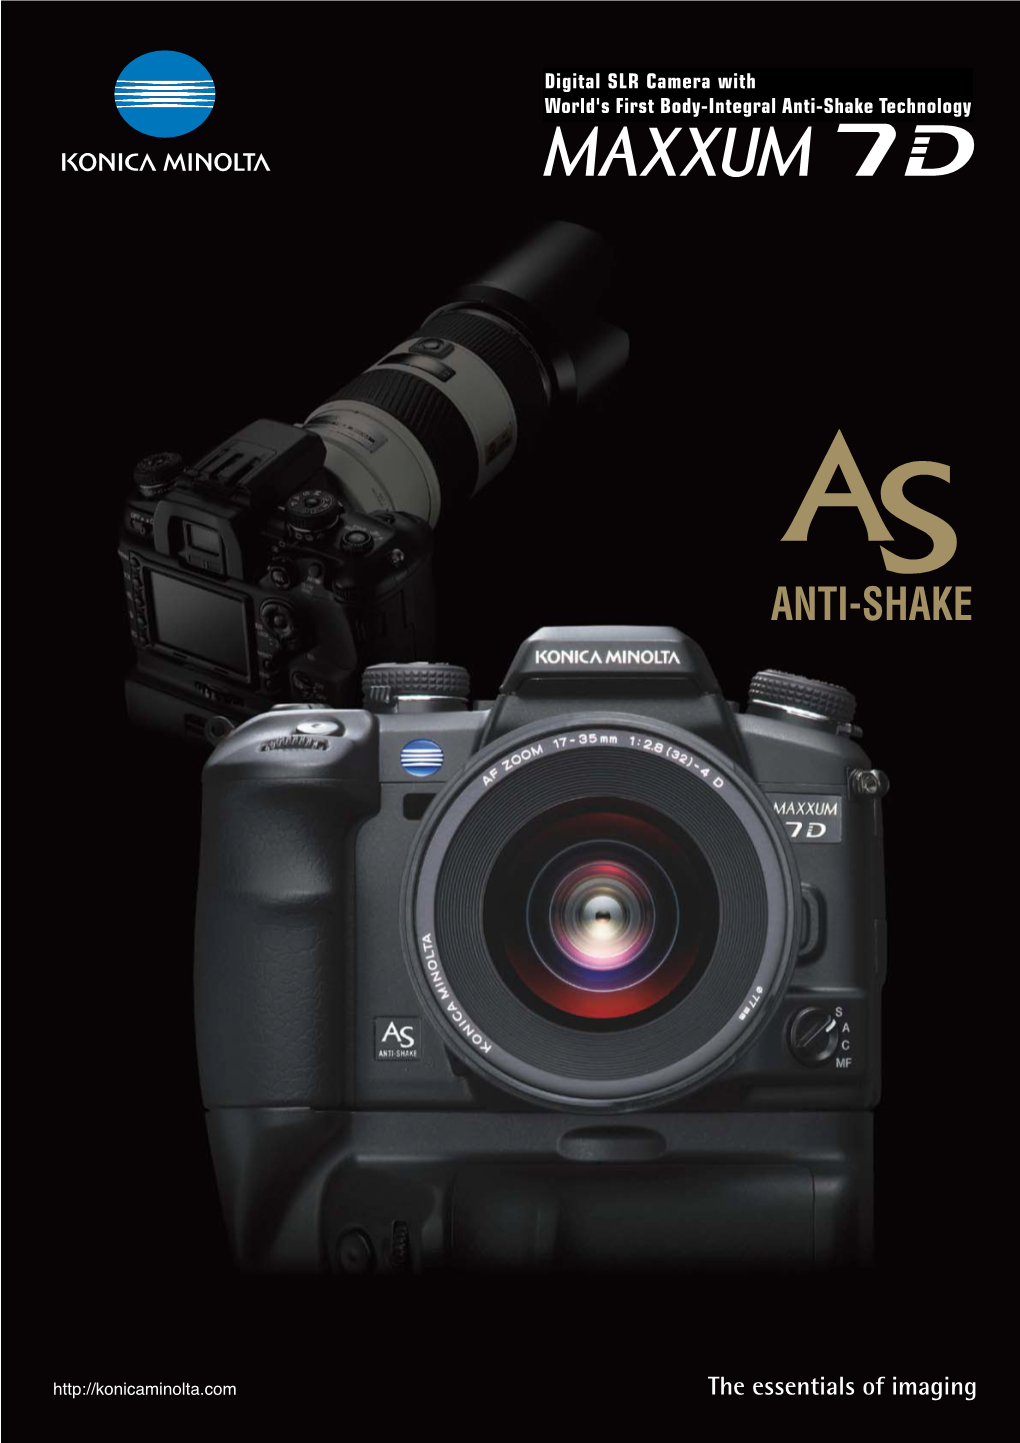 Digital SLR Camera with World's First Body-Integral Anti-Shake Technology